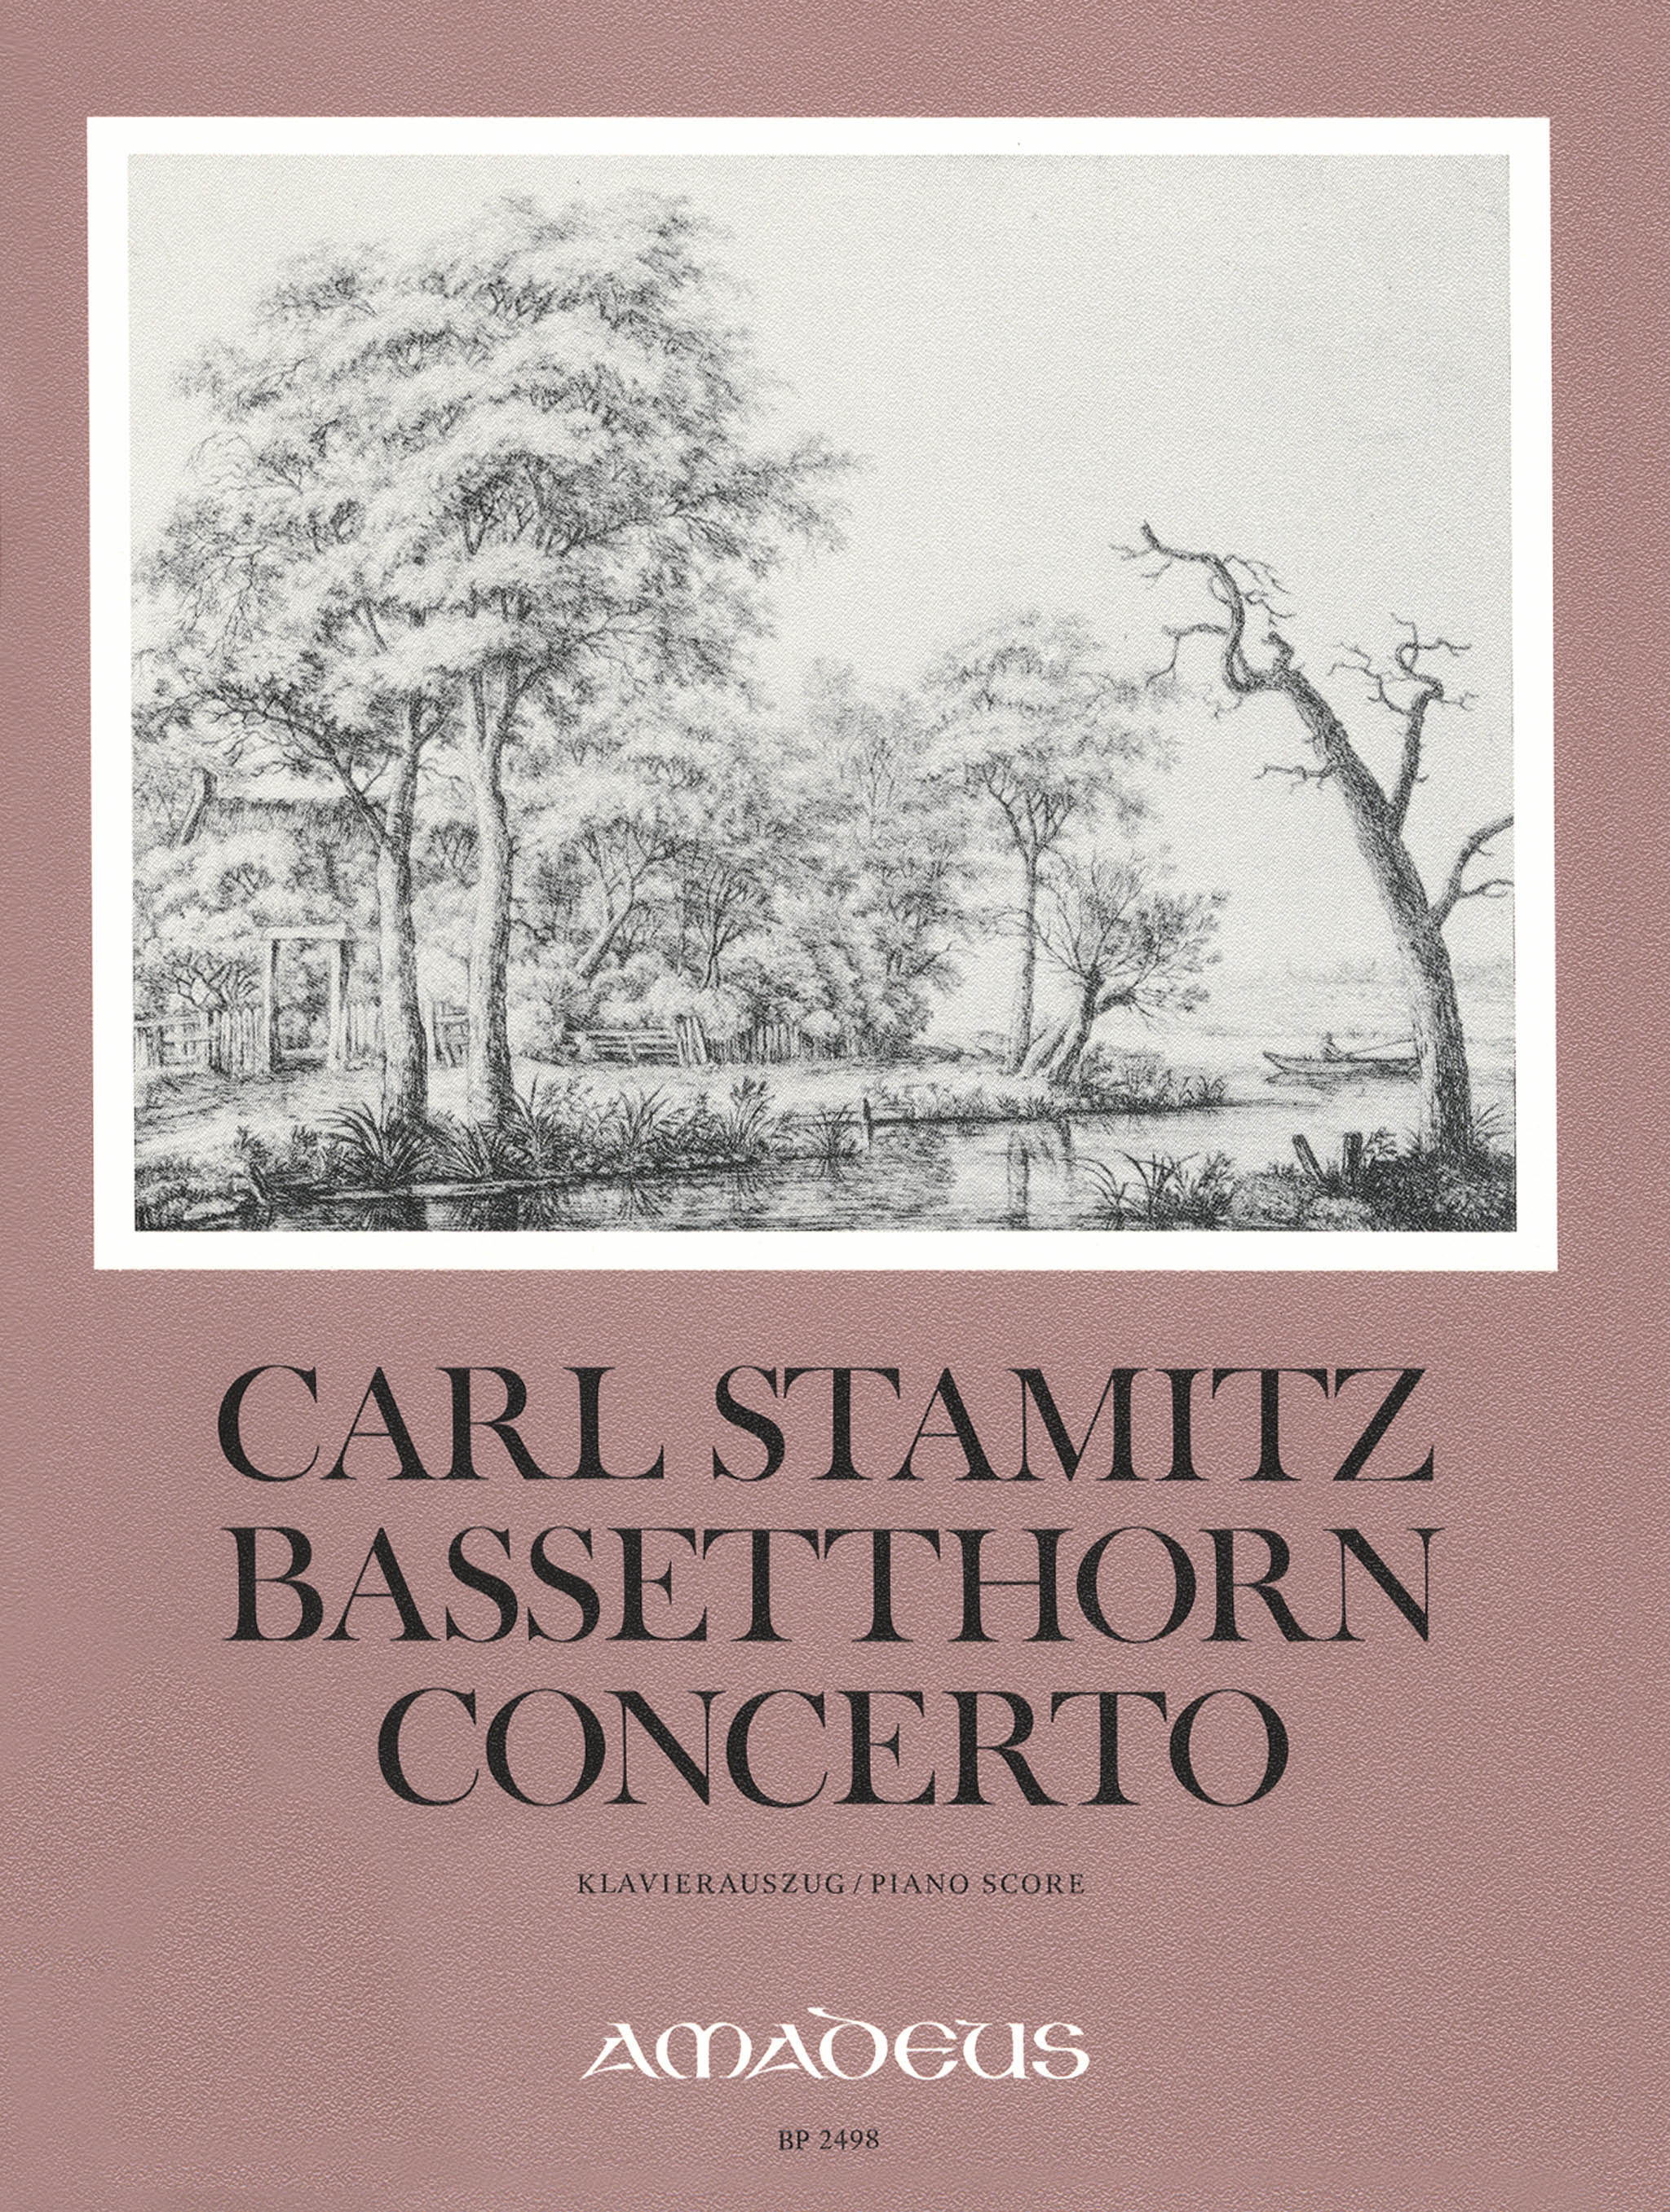 Carl Stamitz Basset Horn Concerto cover